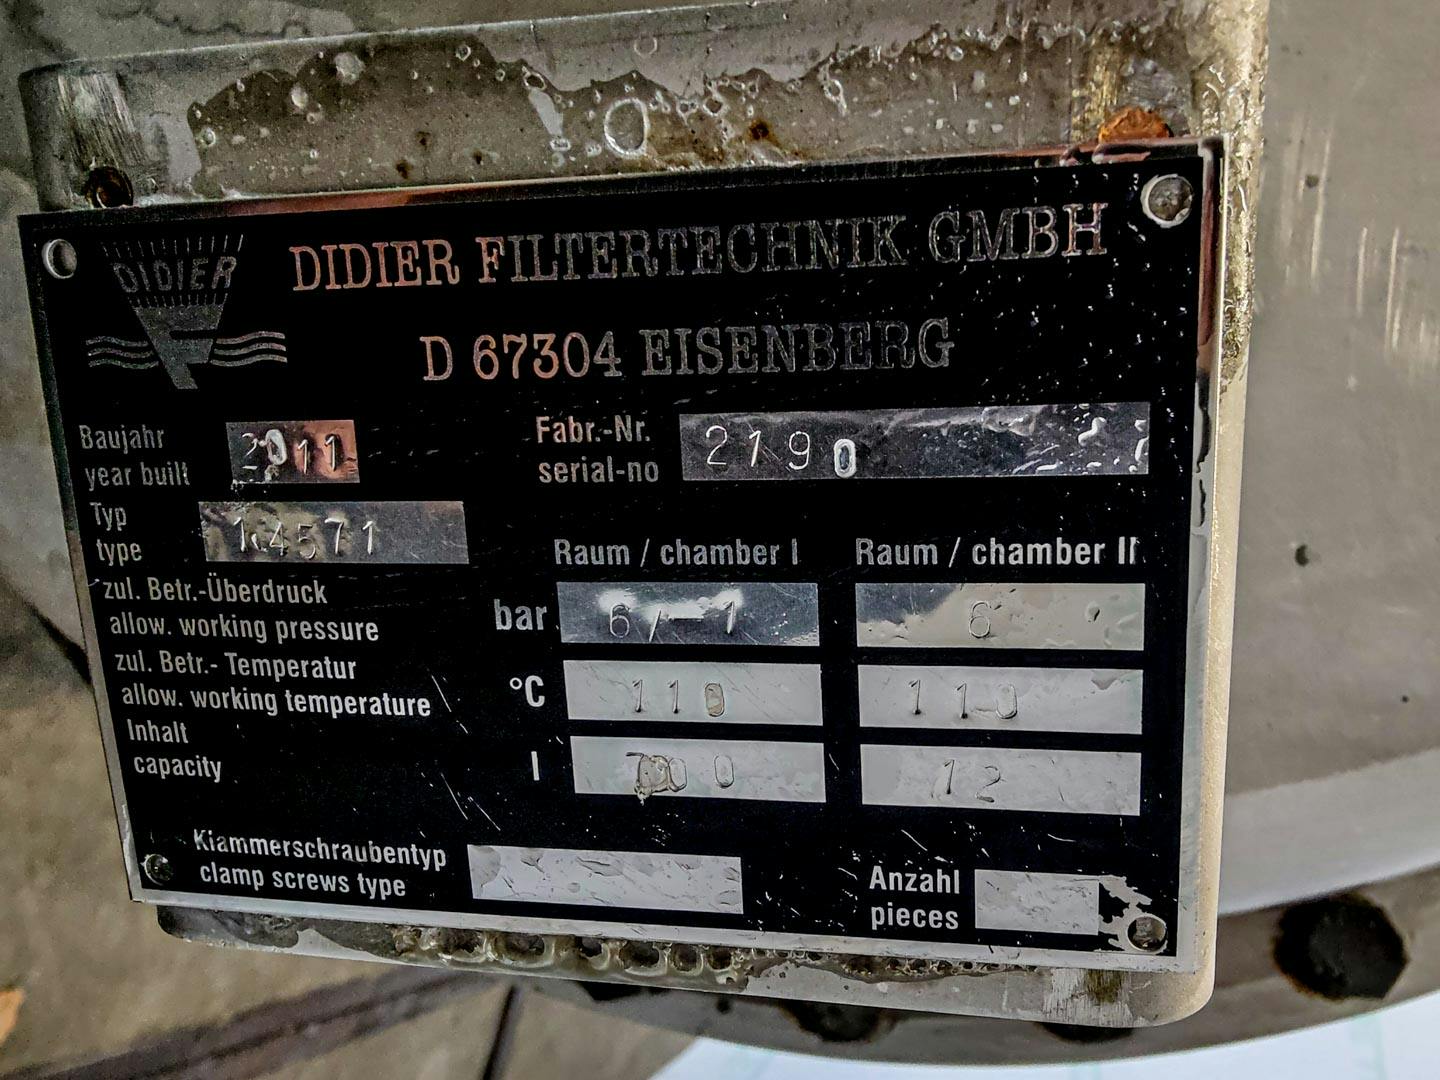 Didier Filtertechnik 550 Ltr. - Reactor de aço inoxidável - image 7